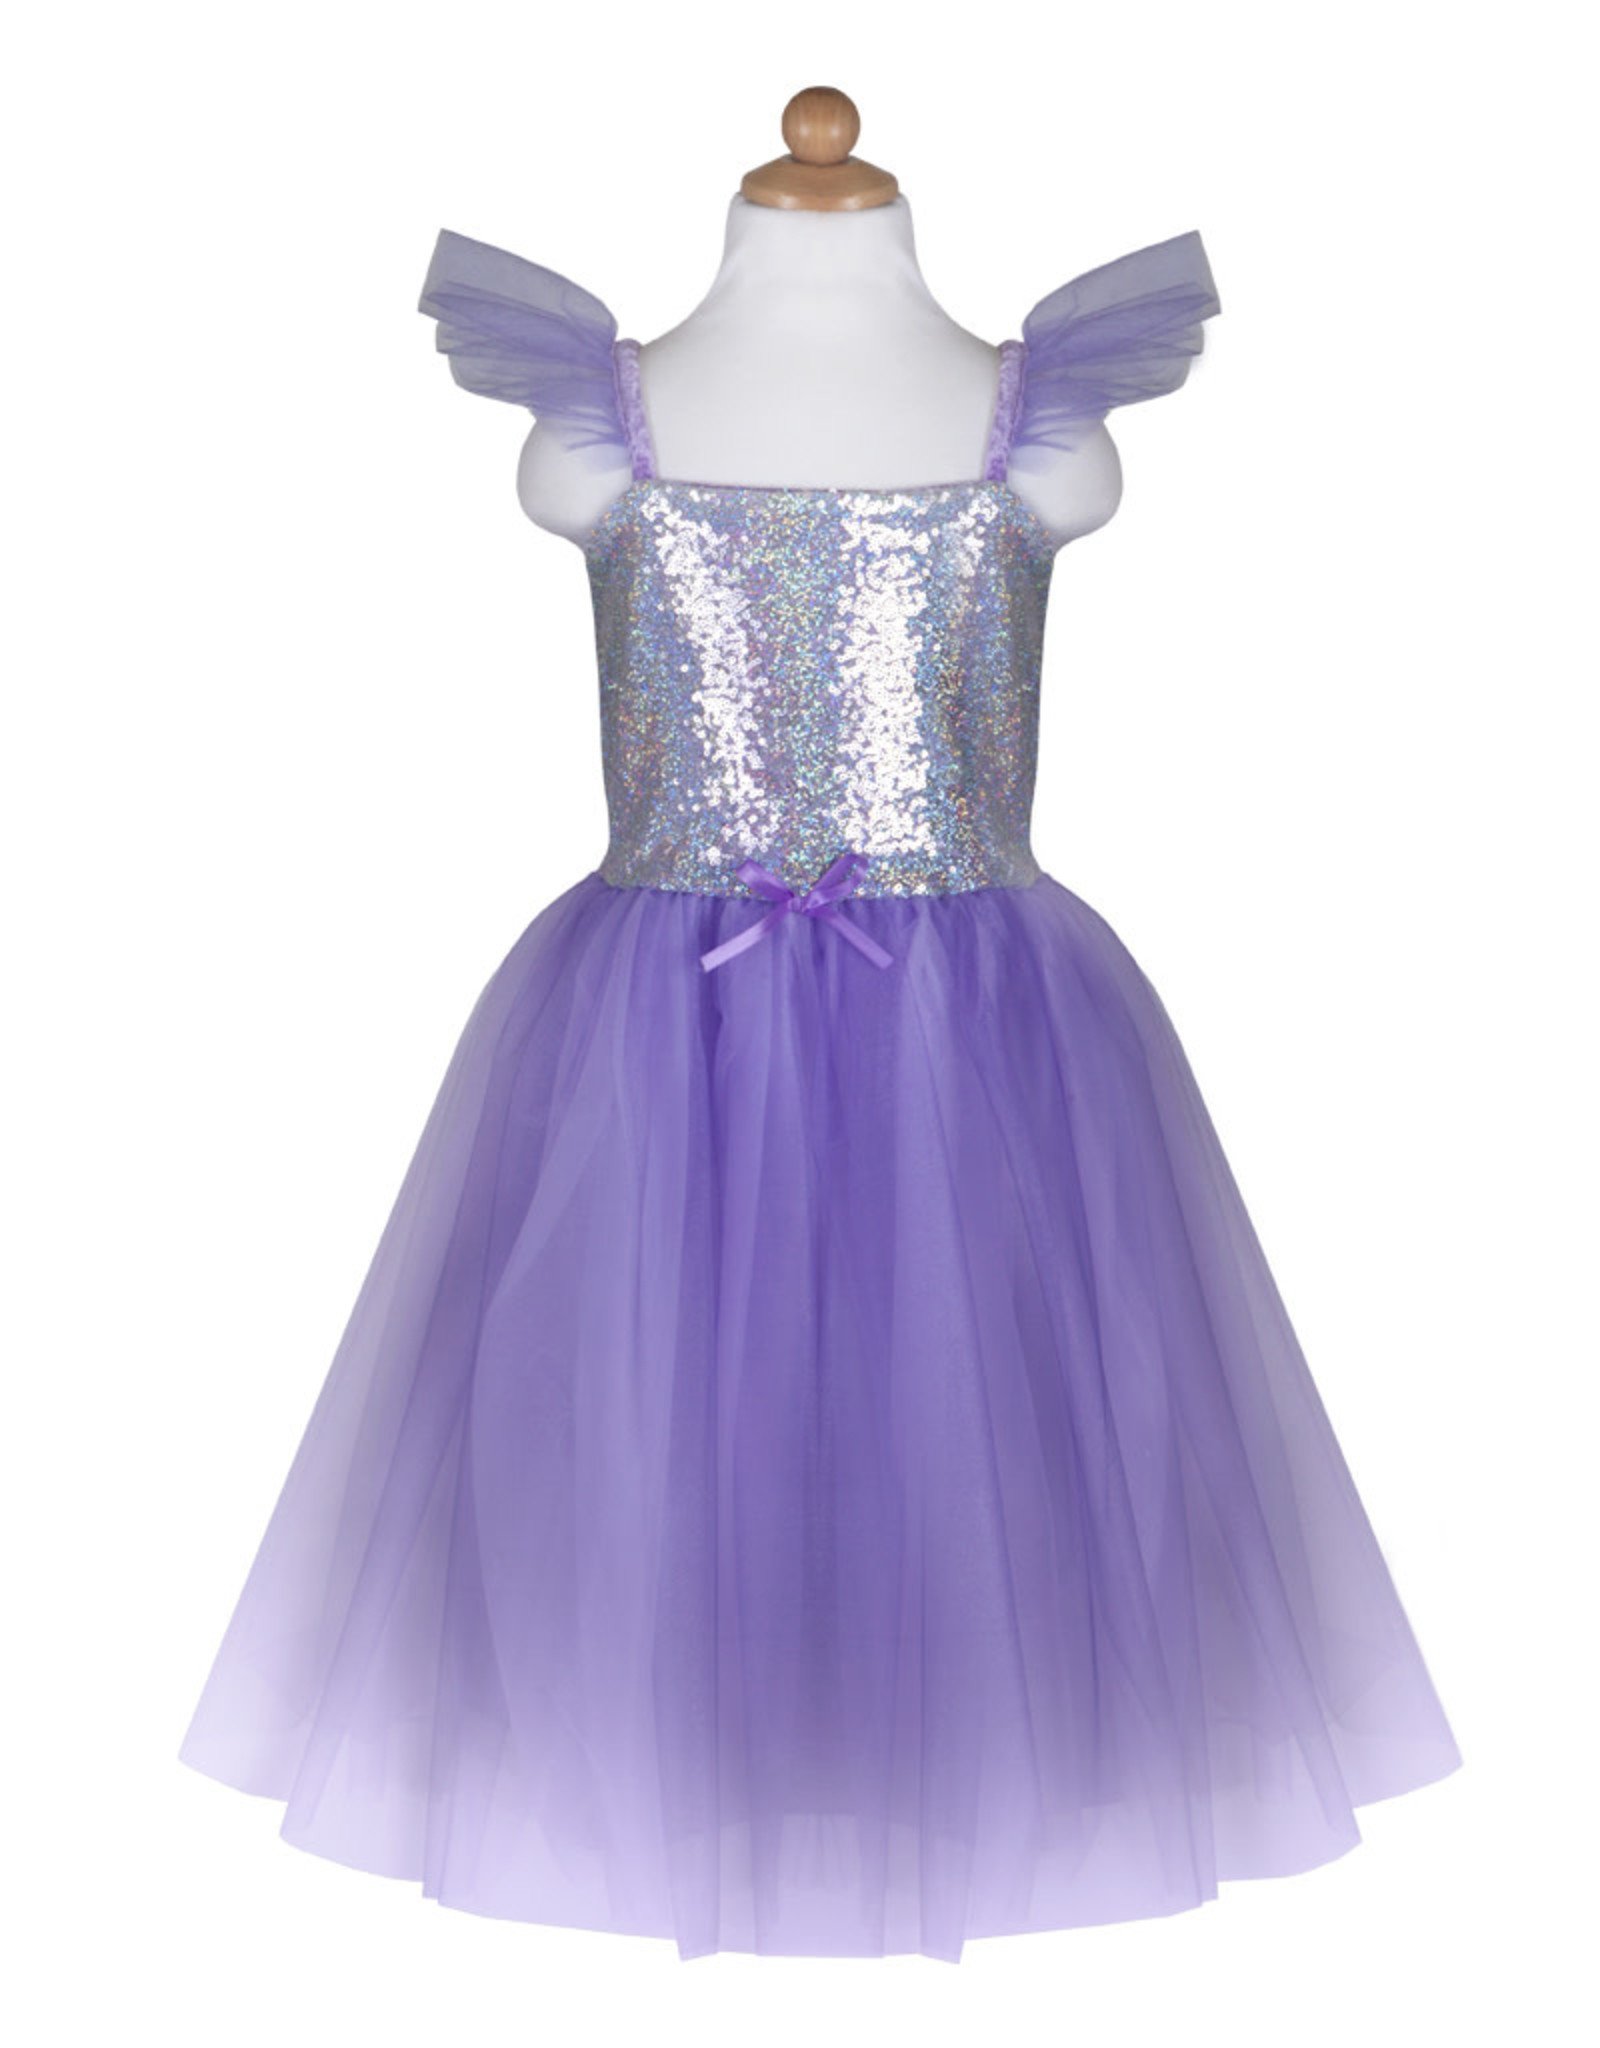 Great Pretenders Sequins Princess Dress - Lilac - Size 5-6